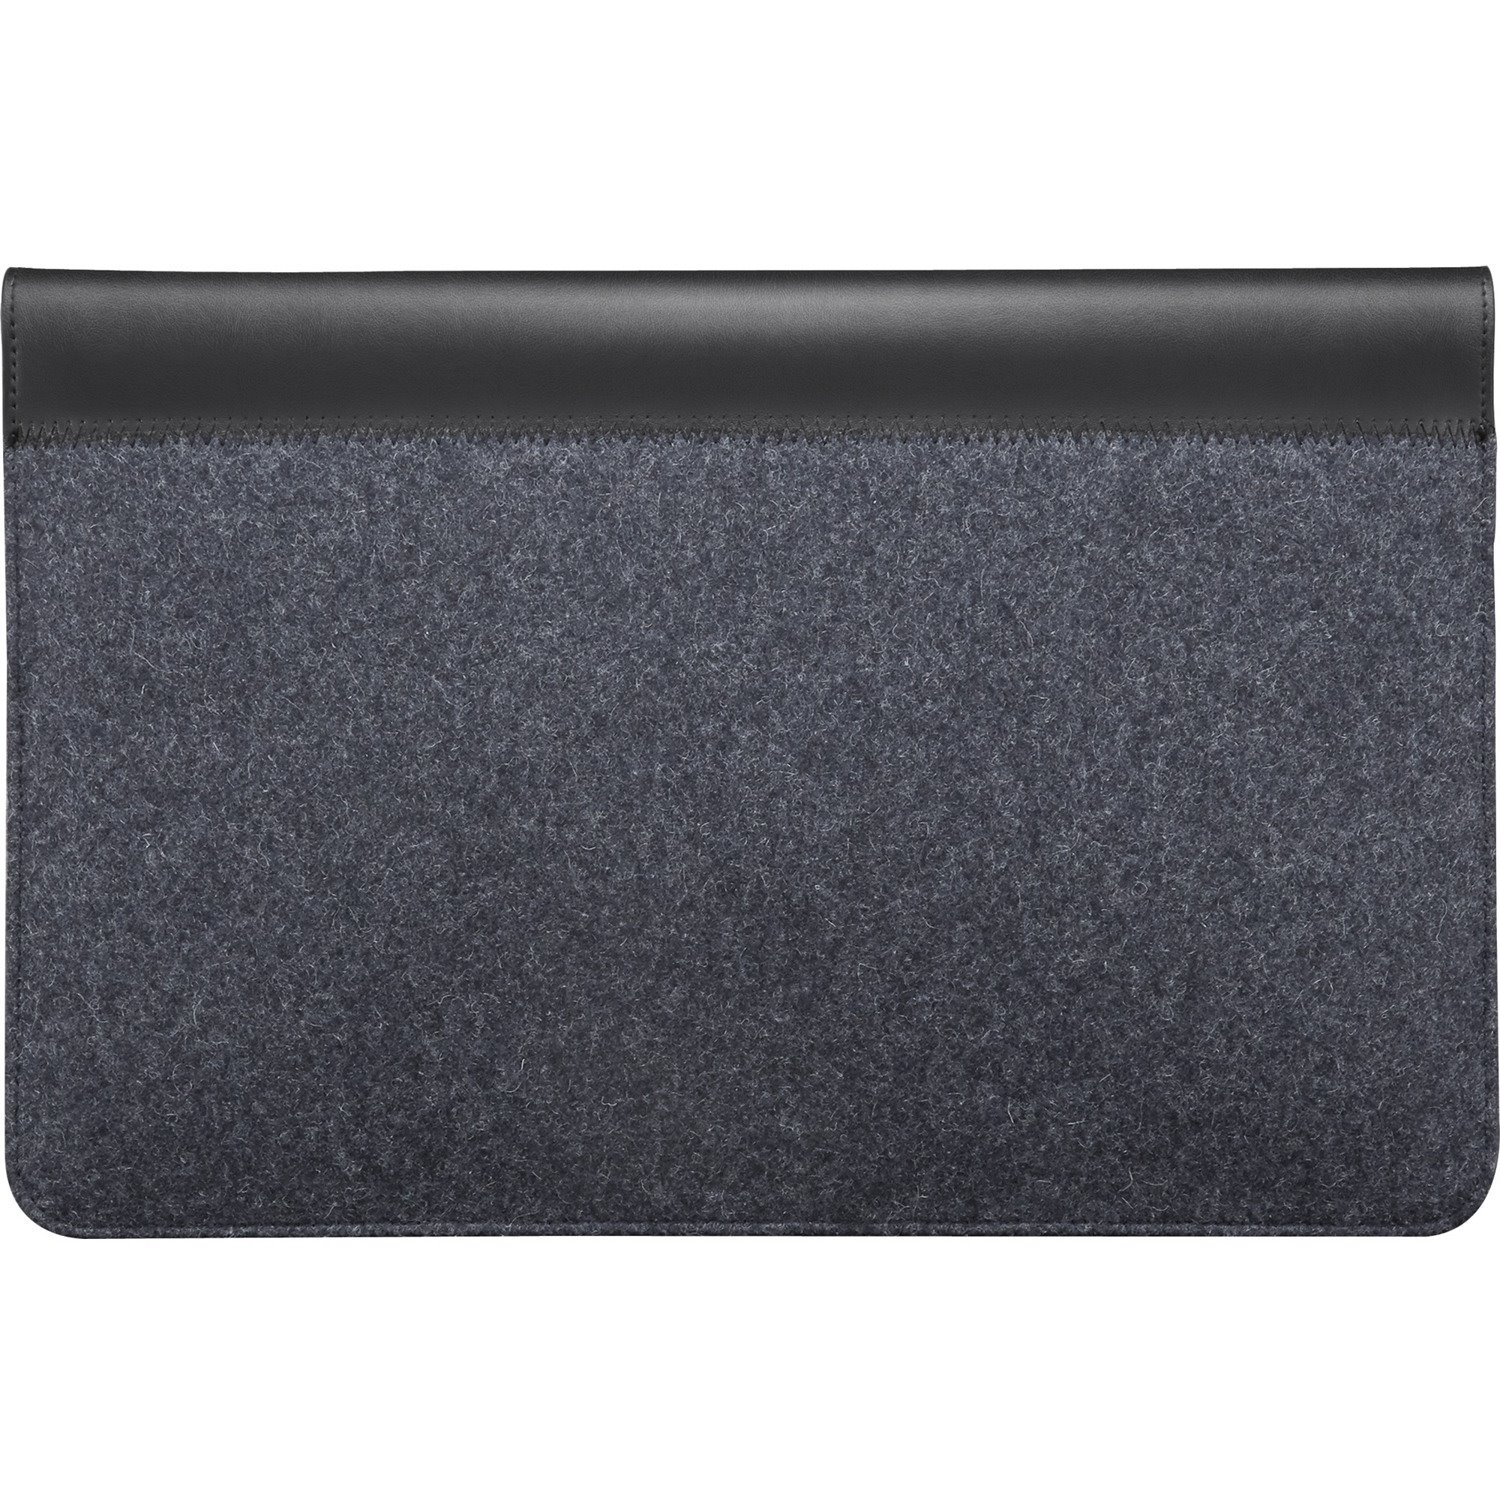 Lenovo Yoga Carrying Case (Sleeve) for 15" Lenovo Notebook - Black